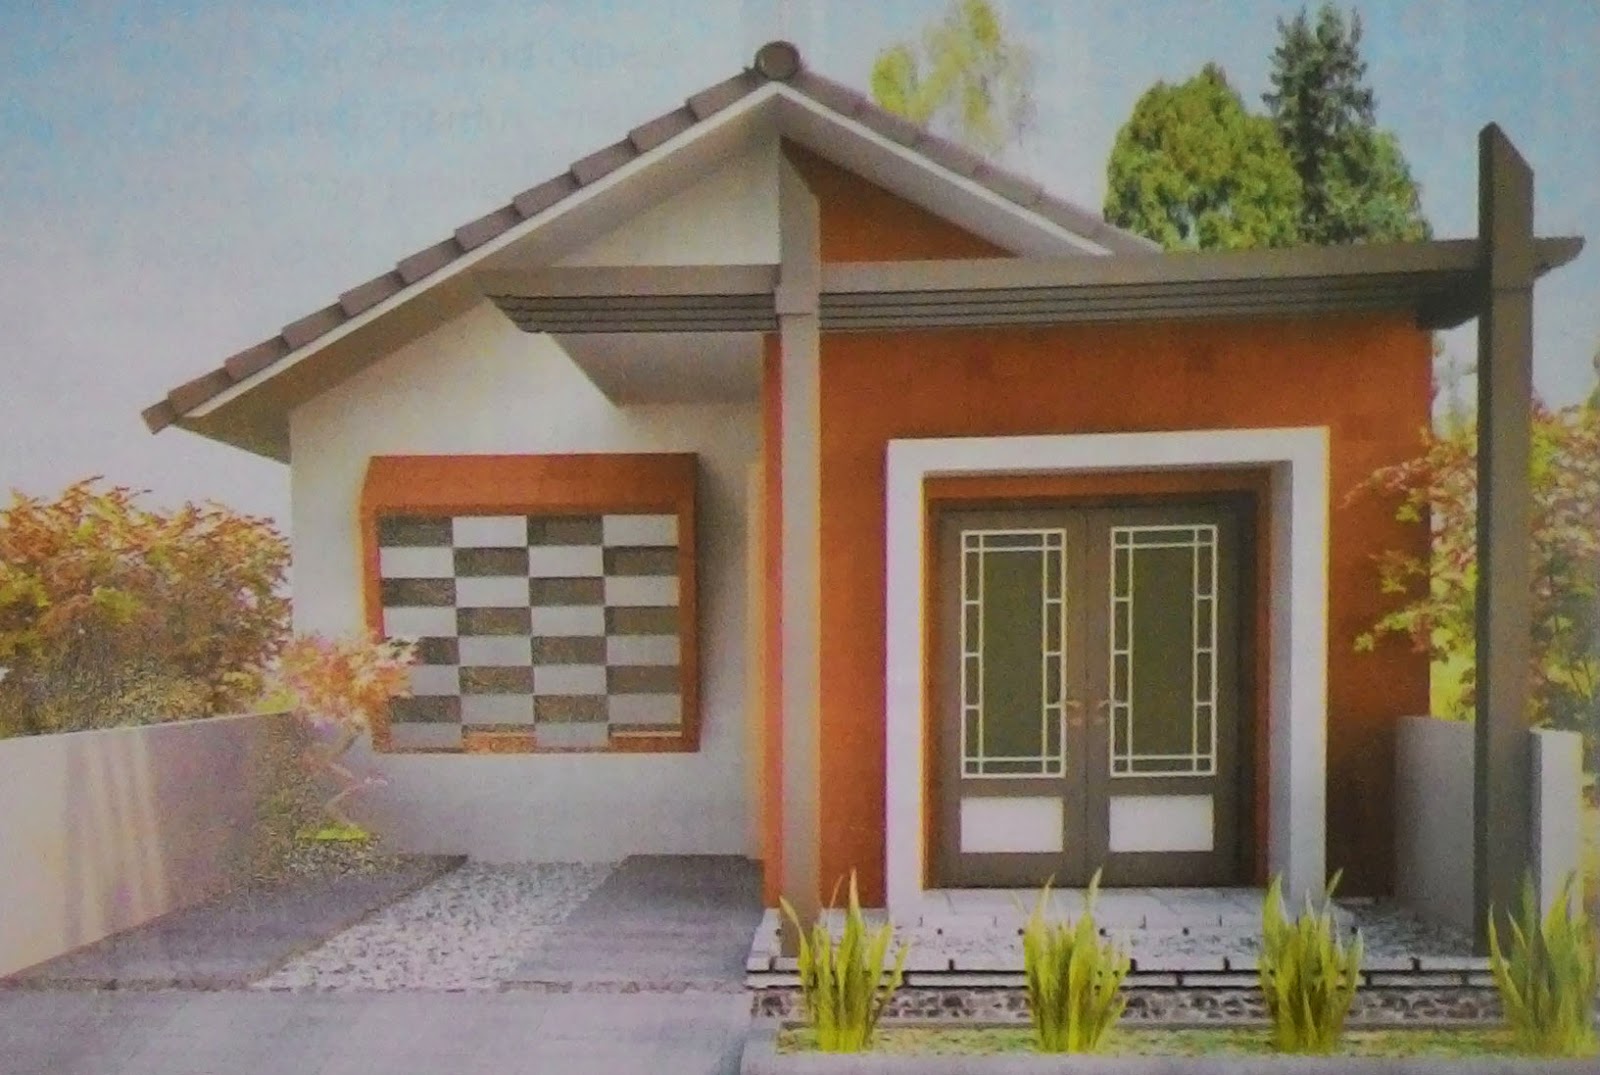 70 Desain Rumah  Minimalis  2  Lantai  Budget 200  Juta  